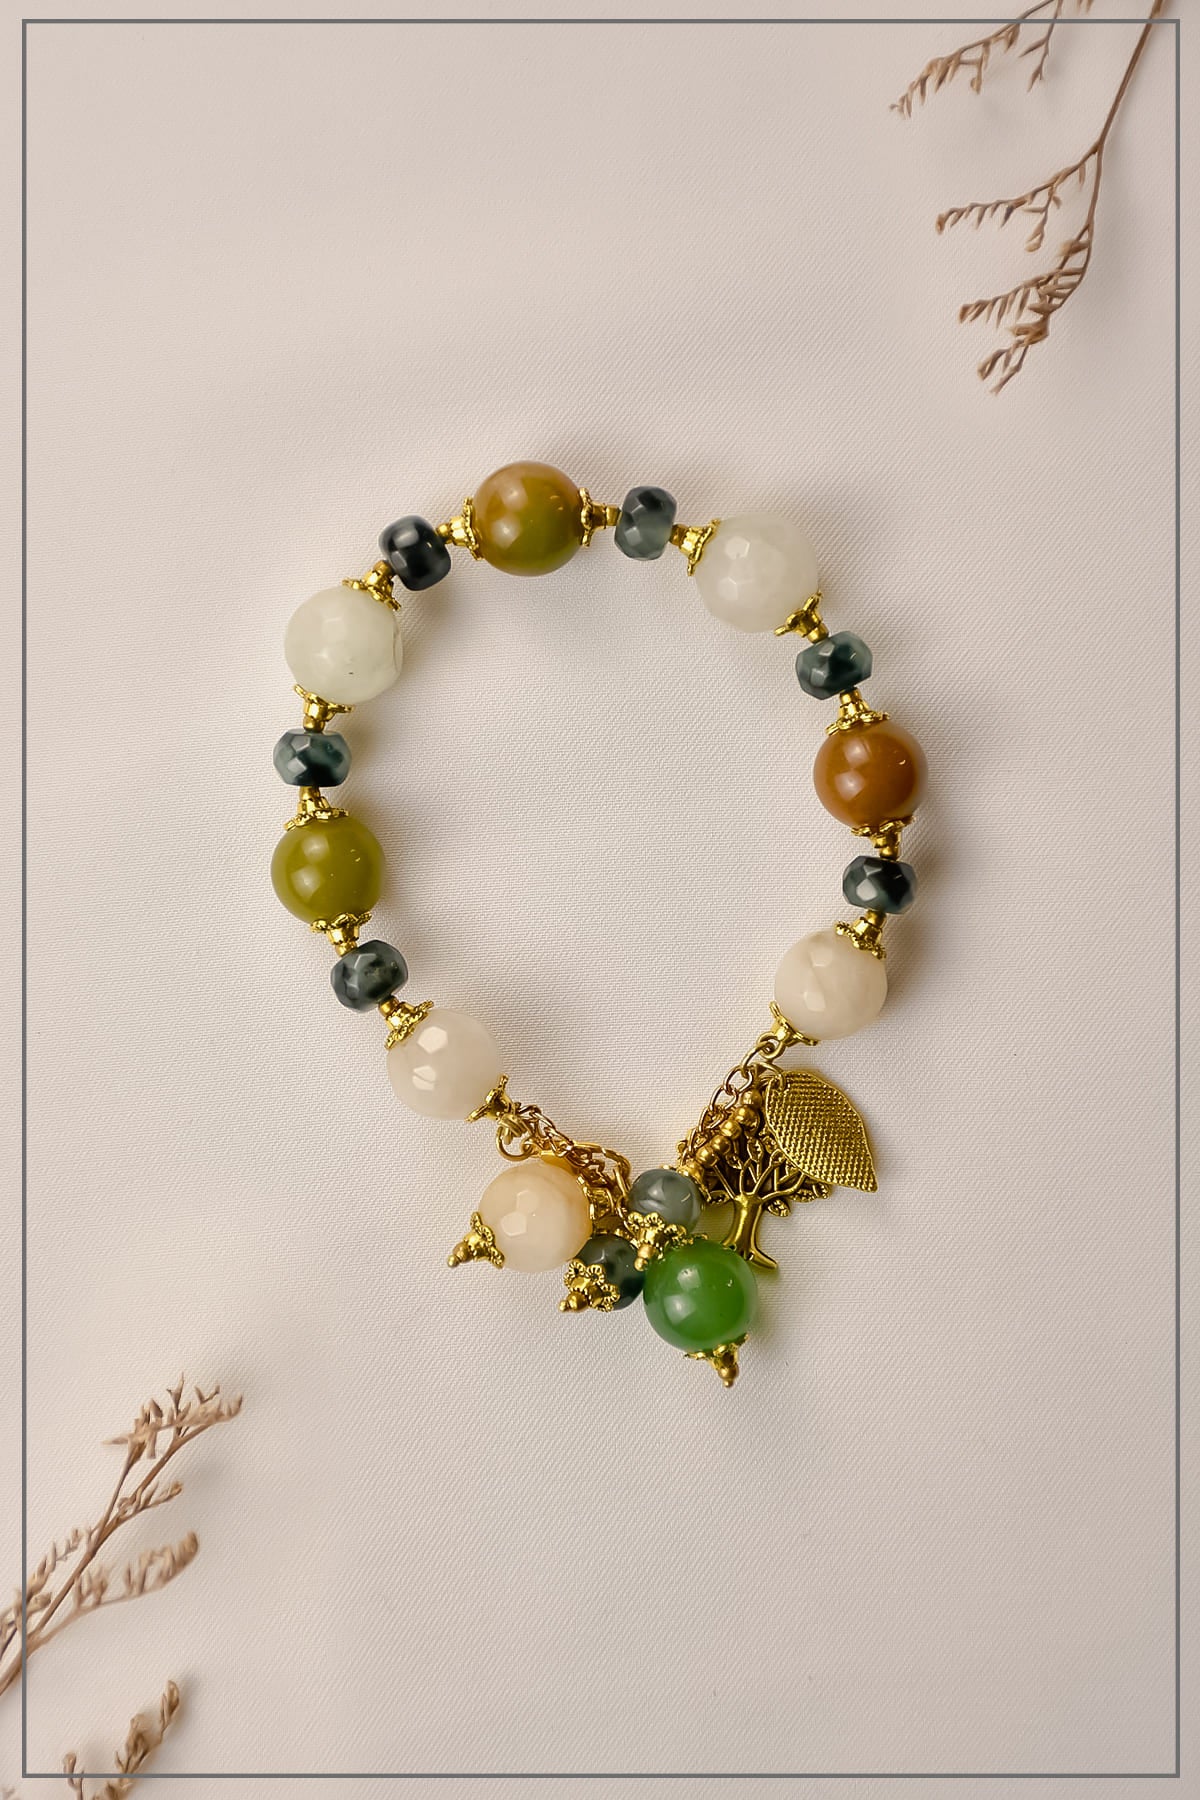 Marvel Beads Bracelets